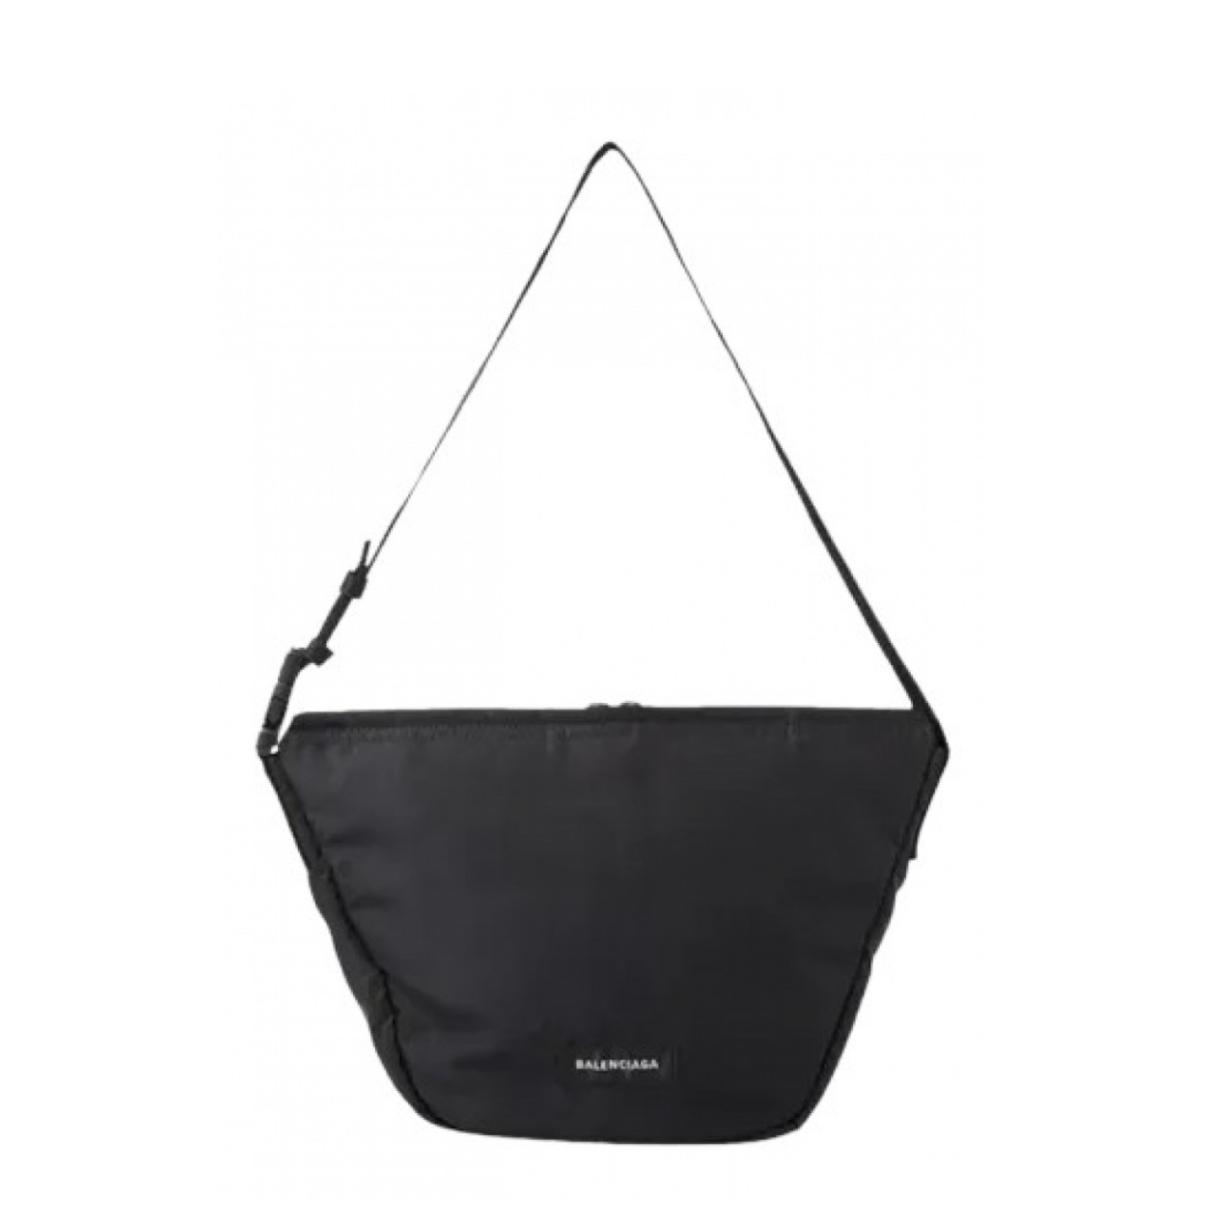 Wheel cloth handbag - 4